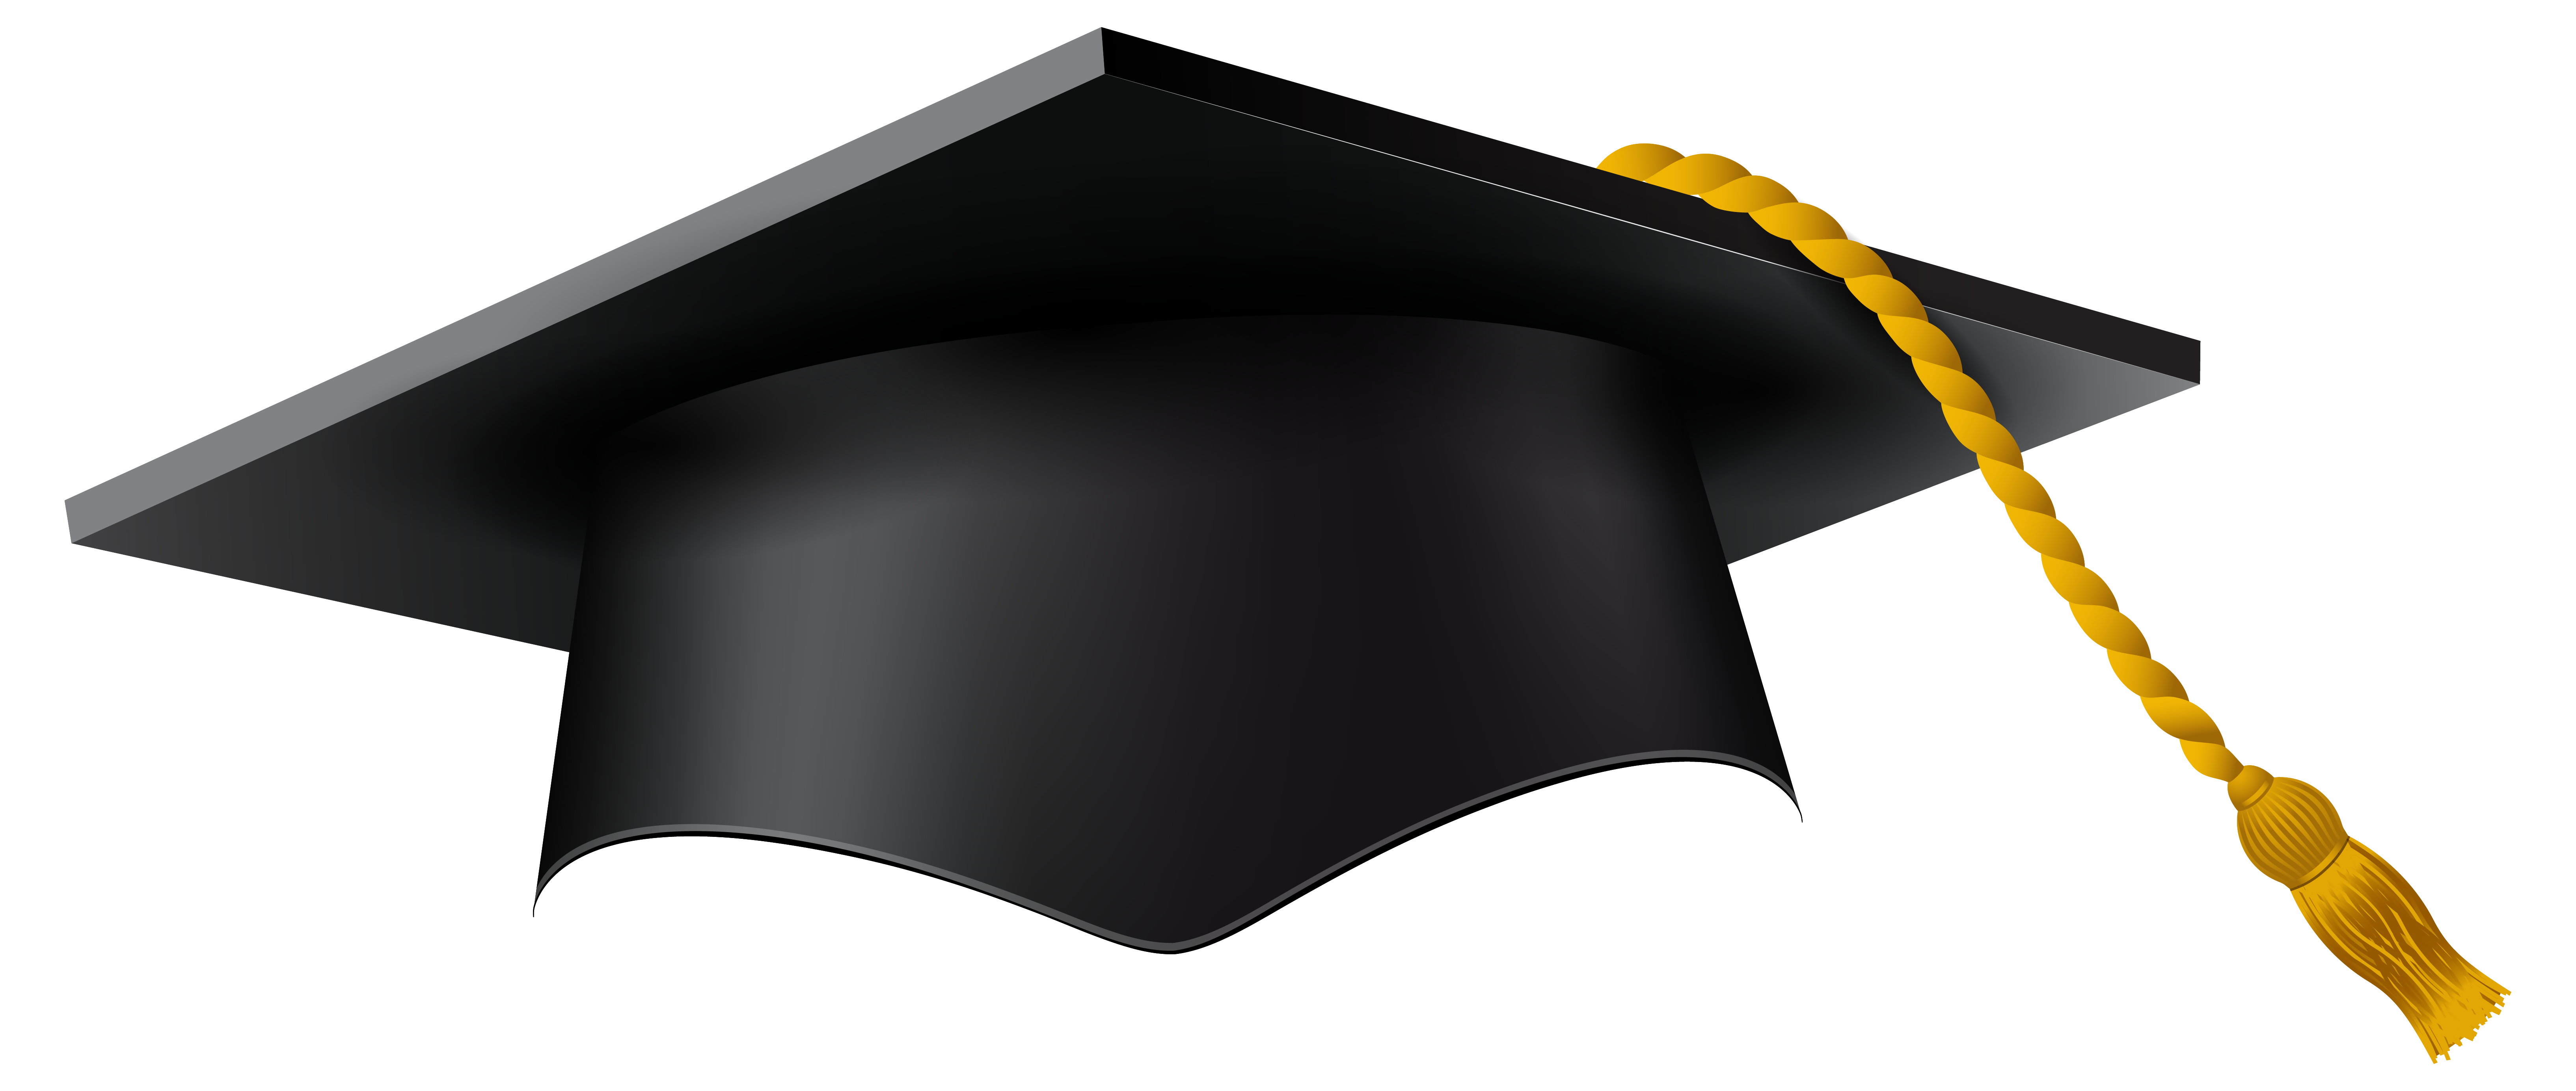 Student clipart cap. Graduation png image gallery